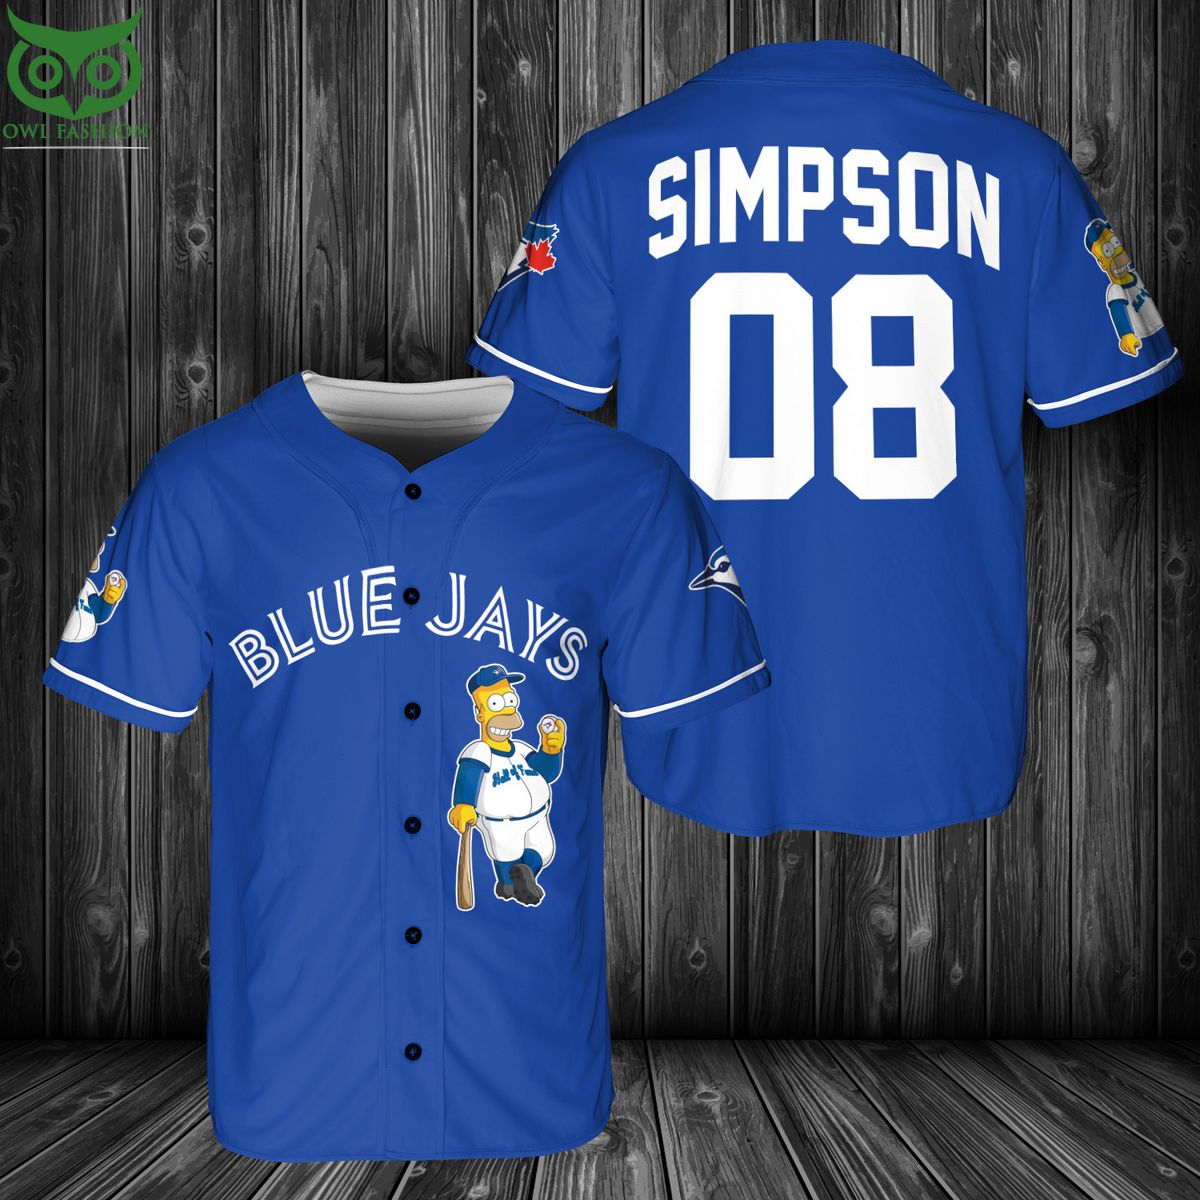 Toronto Blue Jays MLB Simpson Baseball Jersey Cuteness overloaded